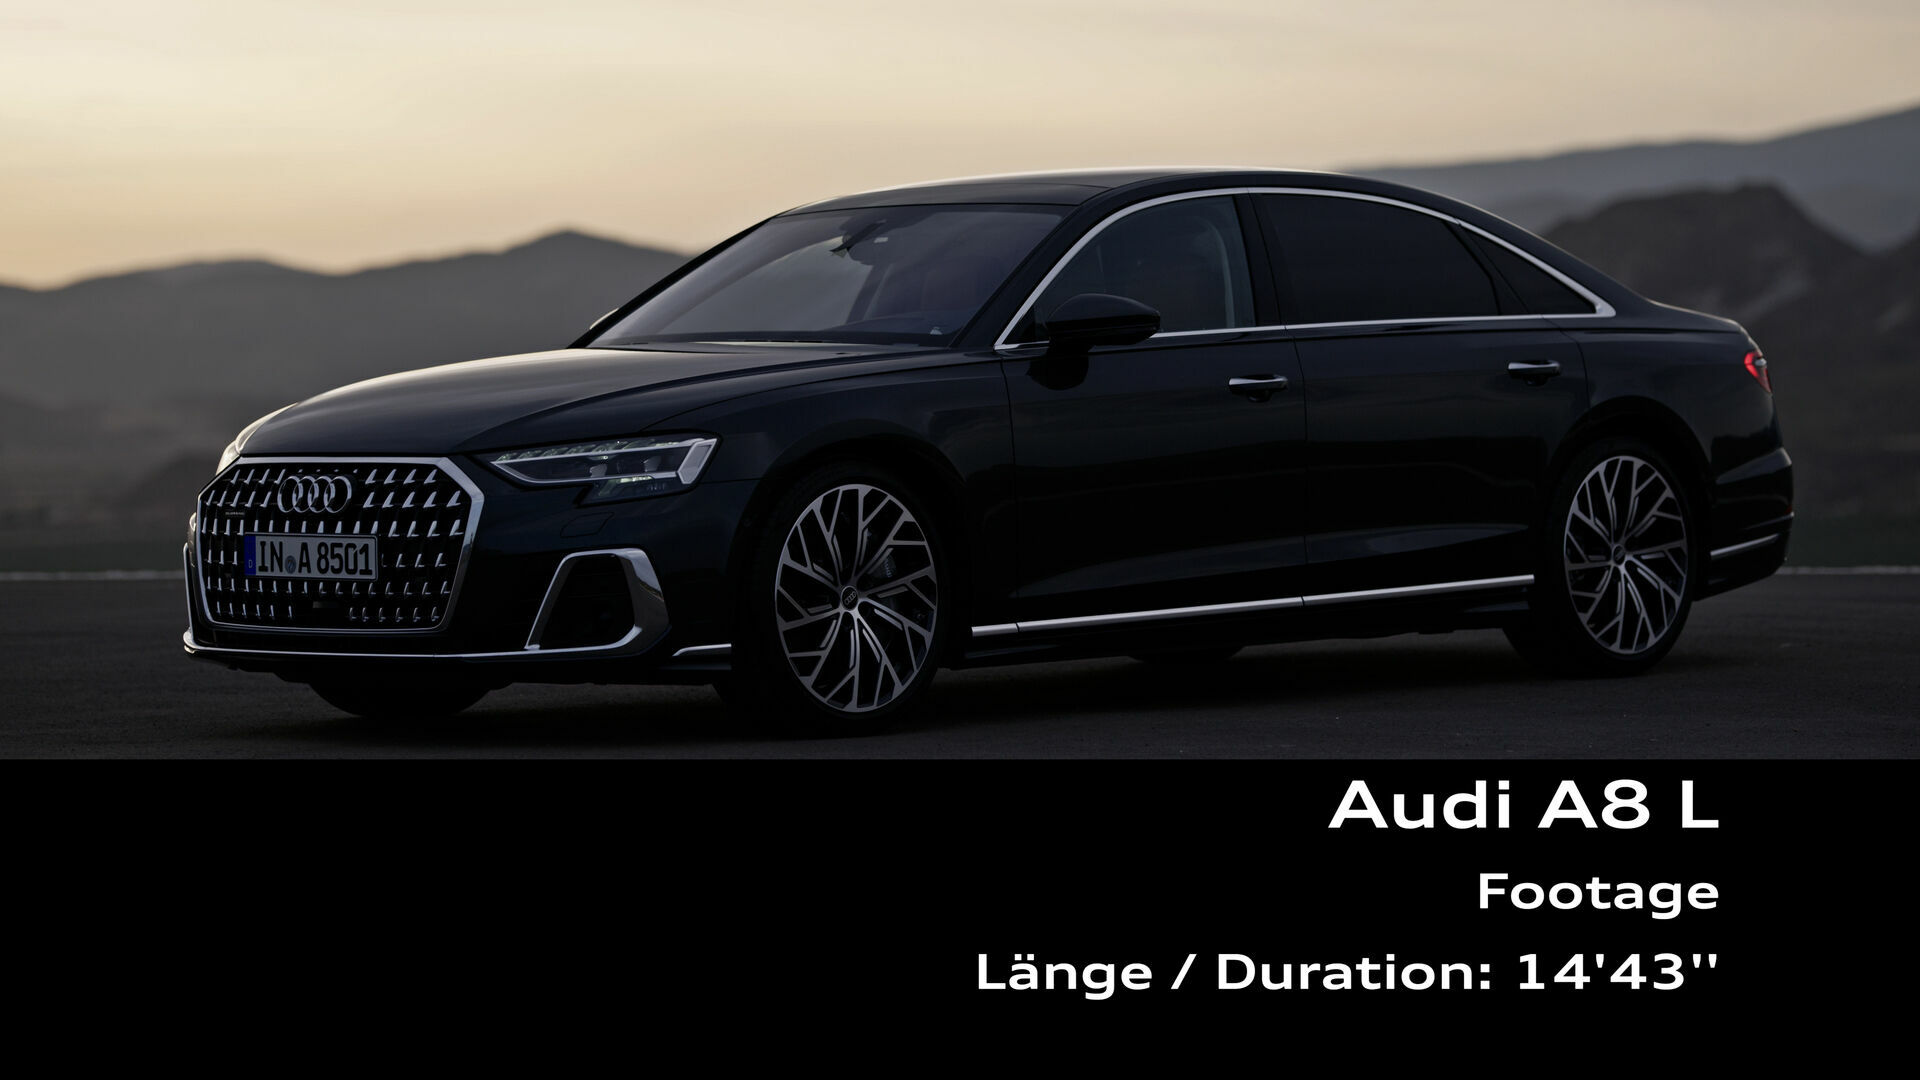 Footage: Audi A8 L